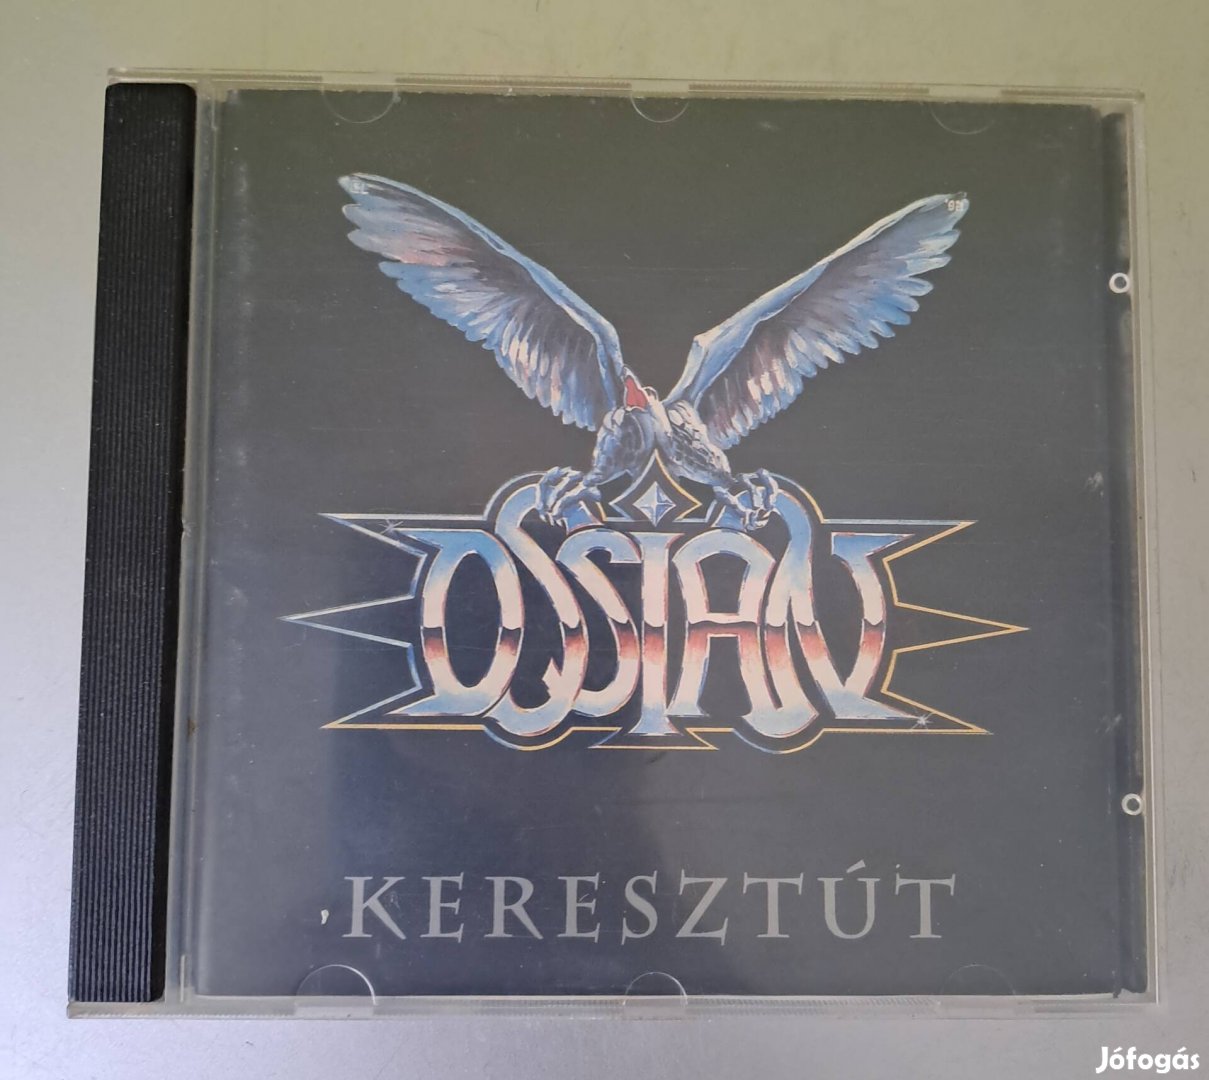 Ossian Keresztut 1994 cd